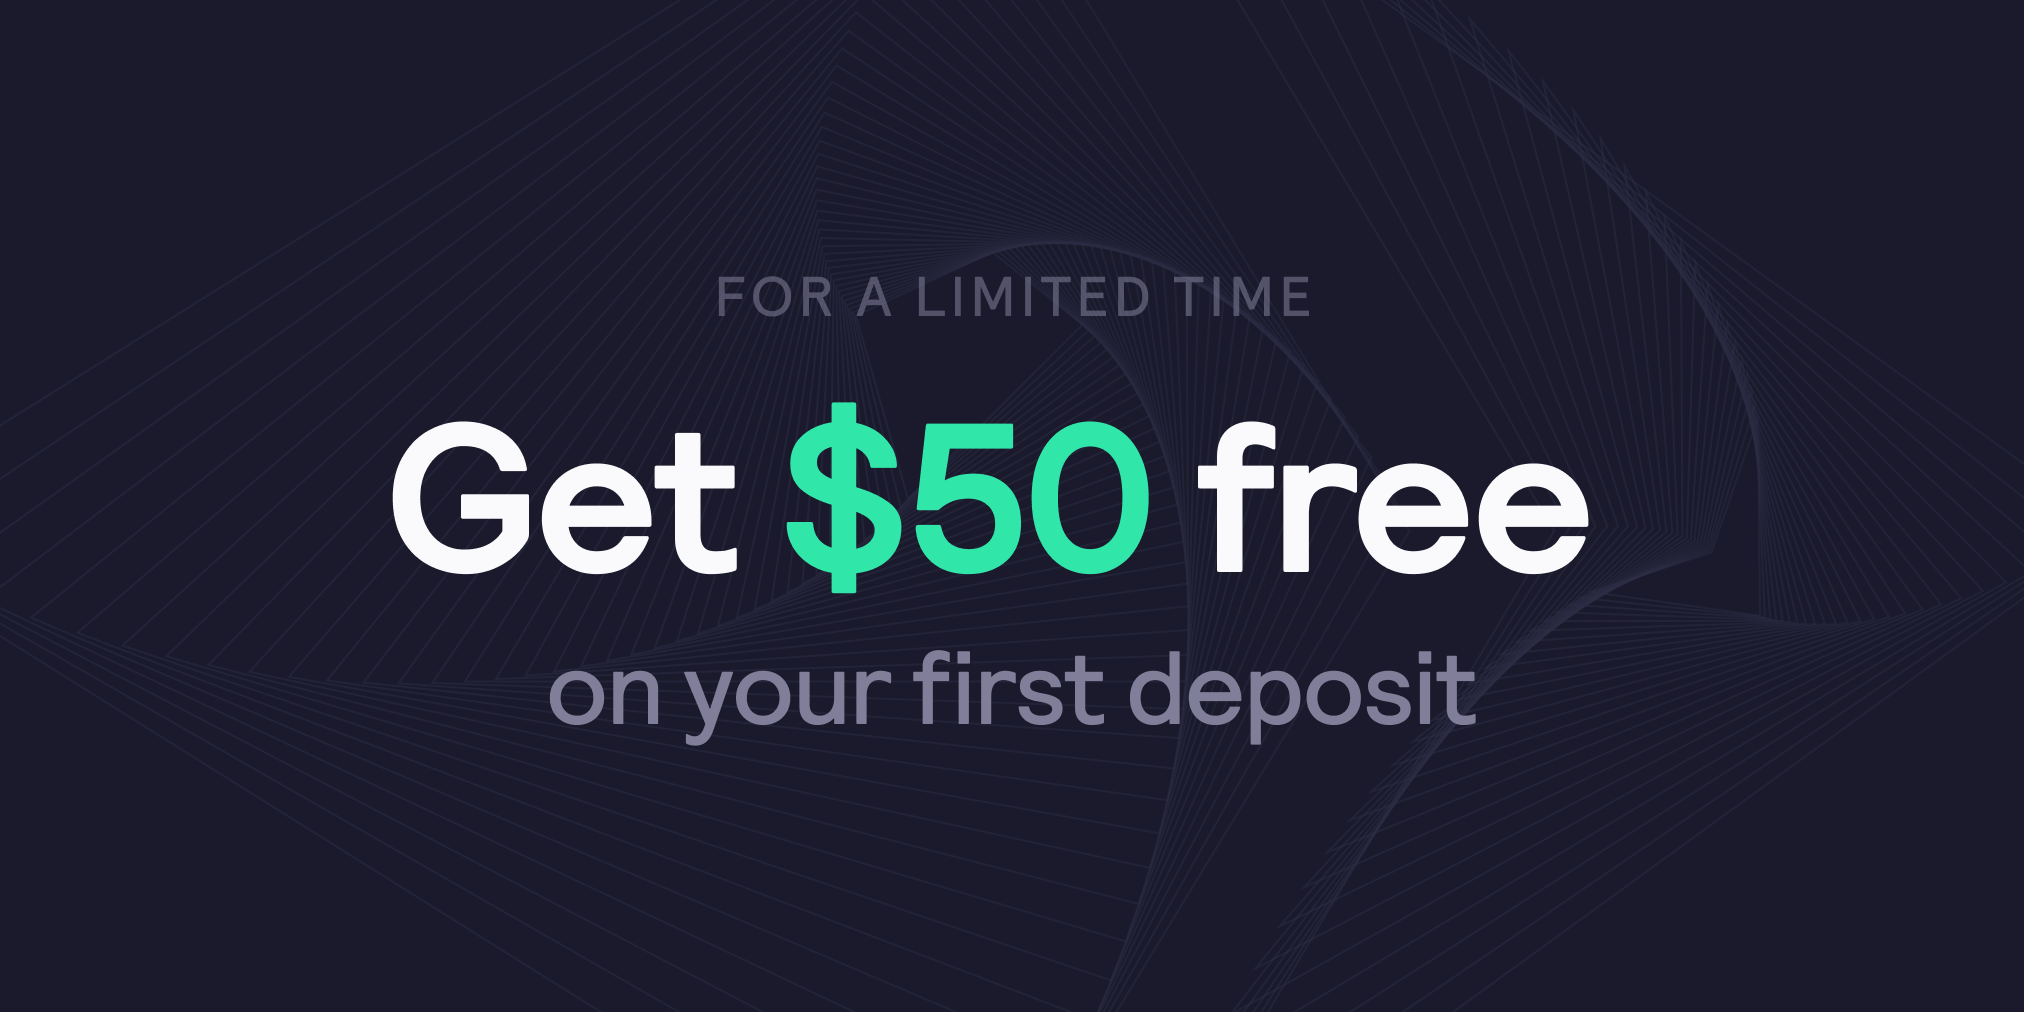 Deposit bonus now live